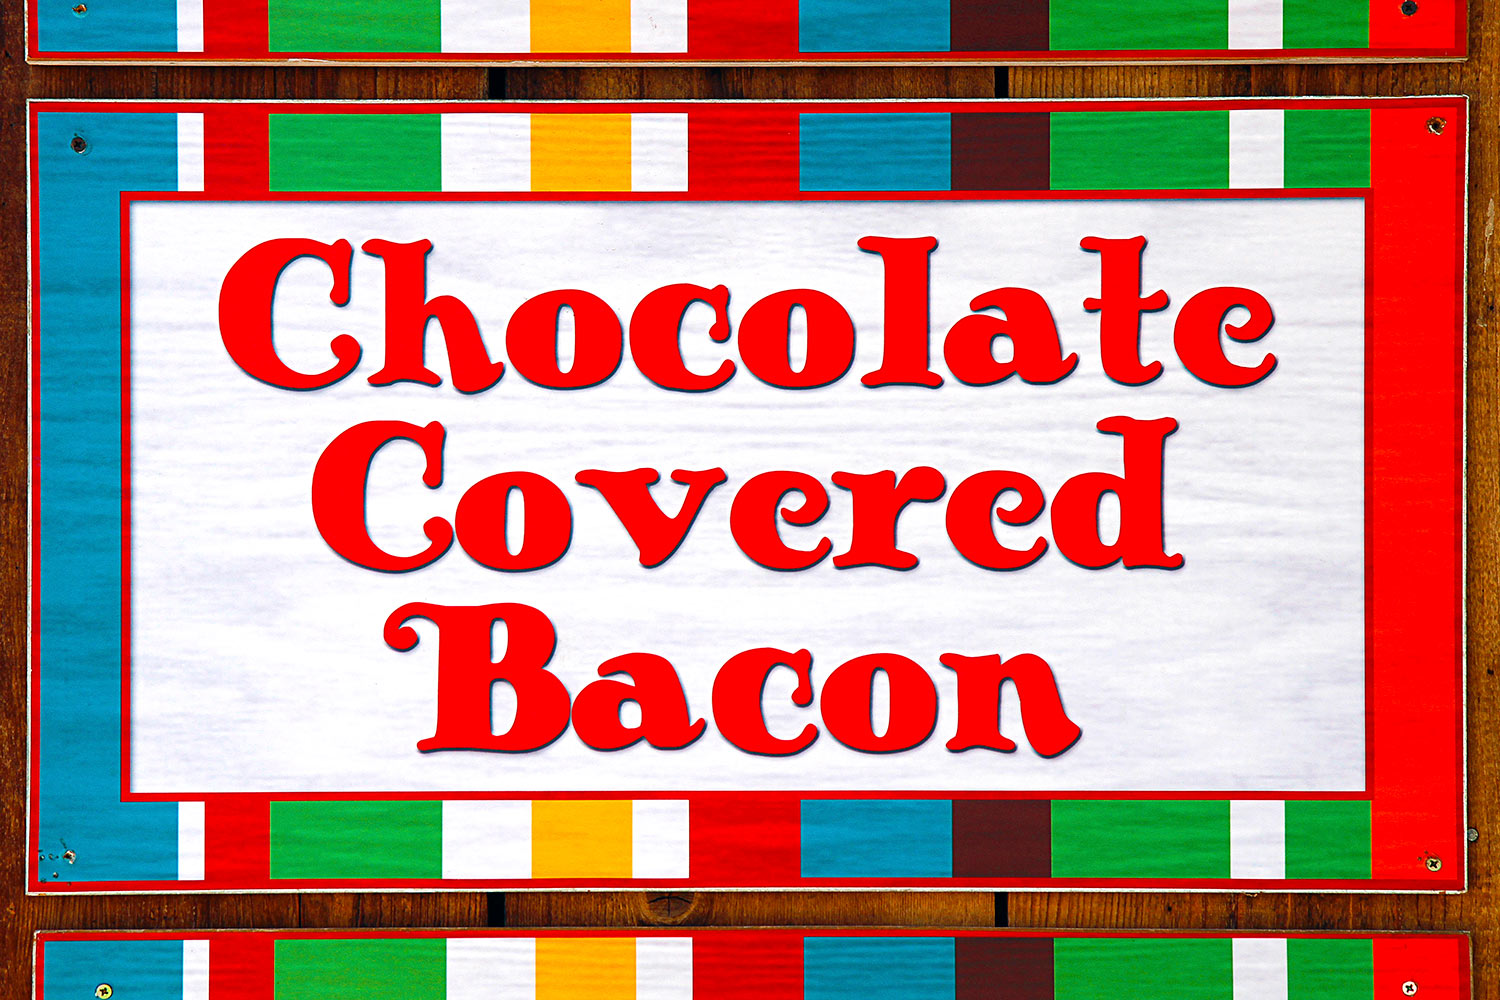 Chocolate & Bacon